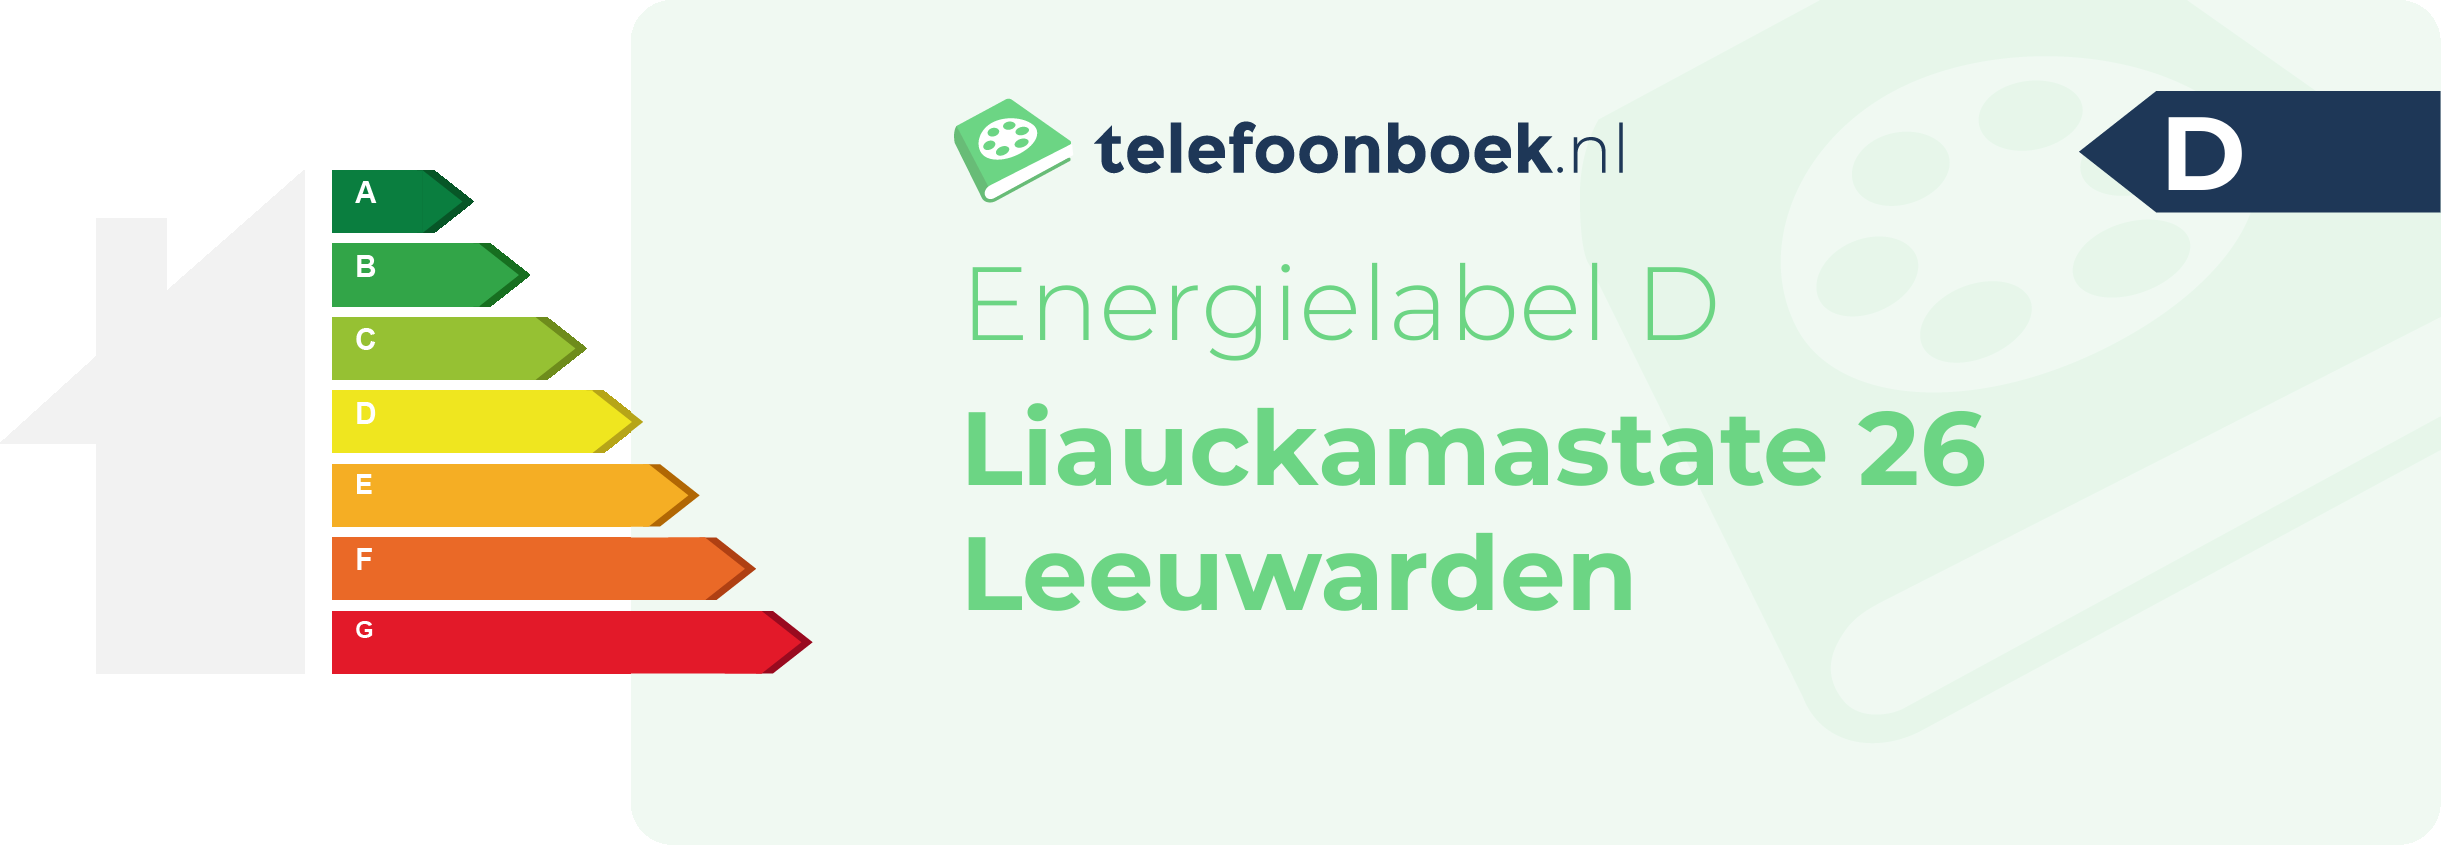 Energielabel Liauckamastate 26 Leeuwarden